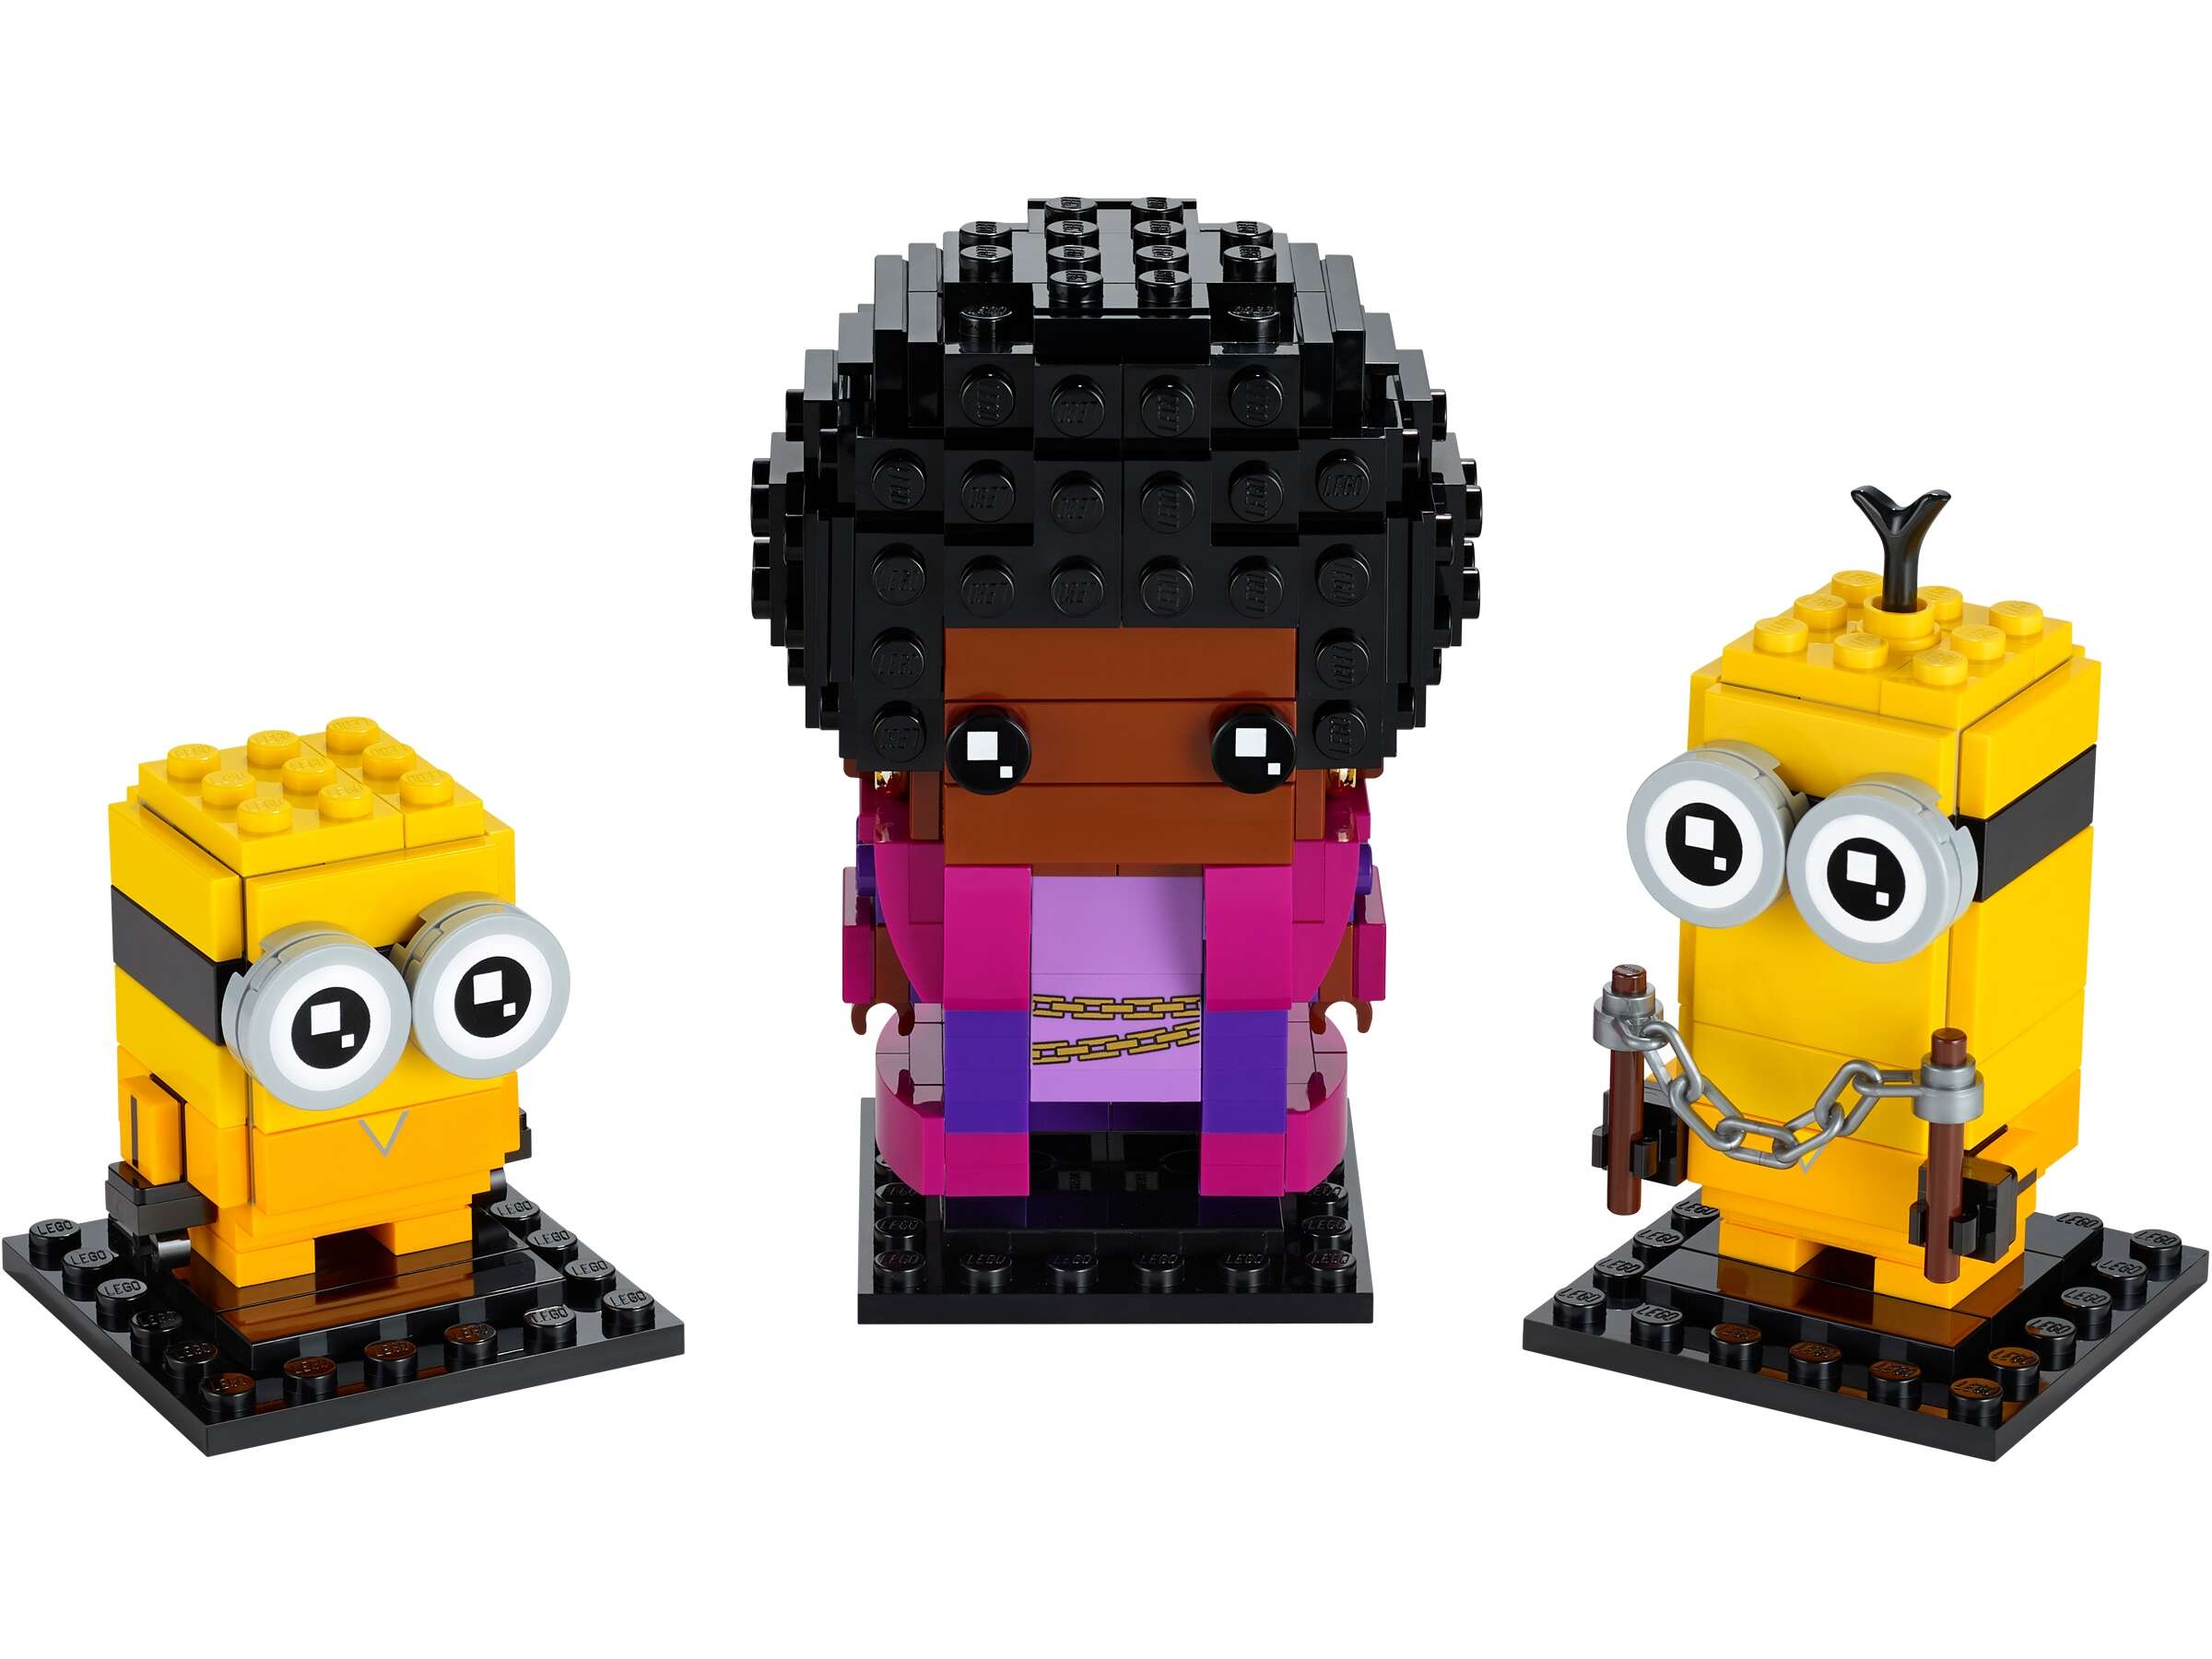 LEGO 40421 Minions Brickheadz Belle Bottom, Kevin und Bob